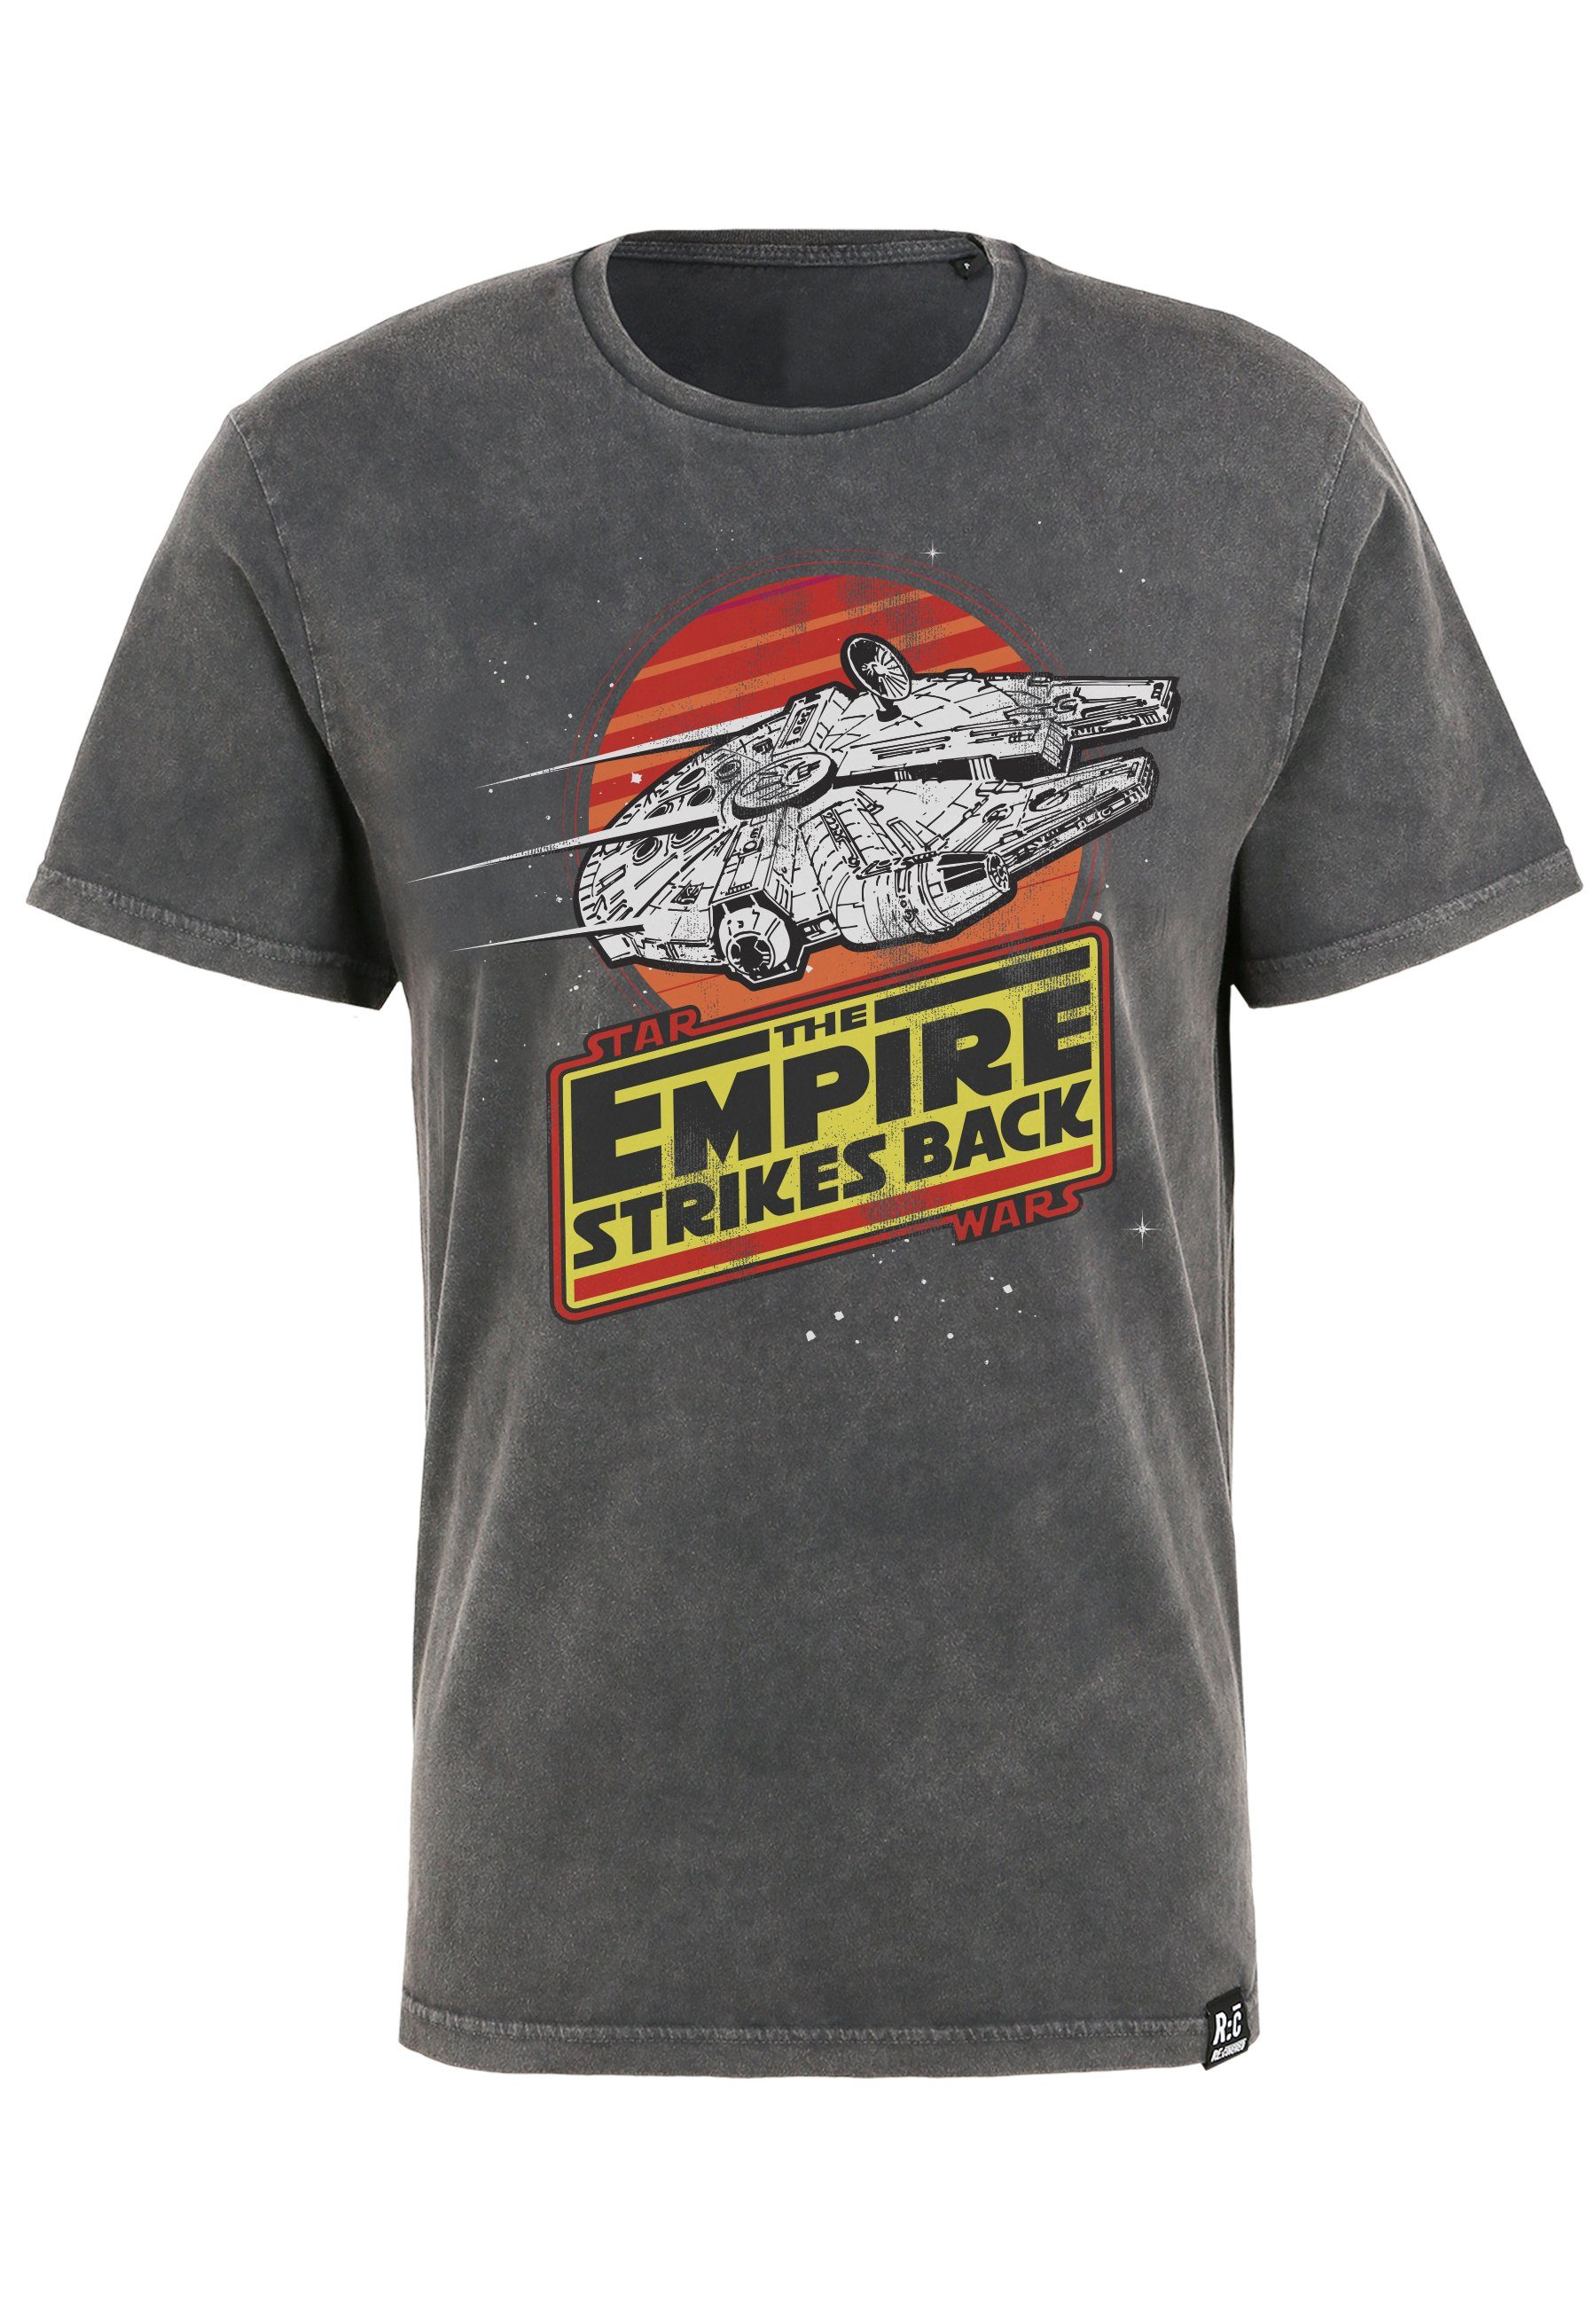 Strikes Black Wars zertifizierte GOTS Bio-Baumwolle Star Falcon Millenium Washed Back Empire Recovered T-Shirt